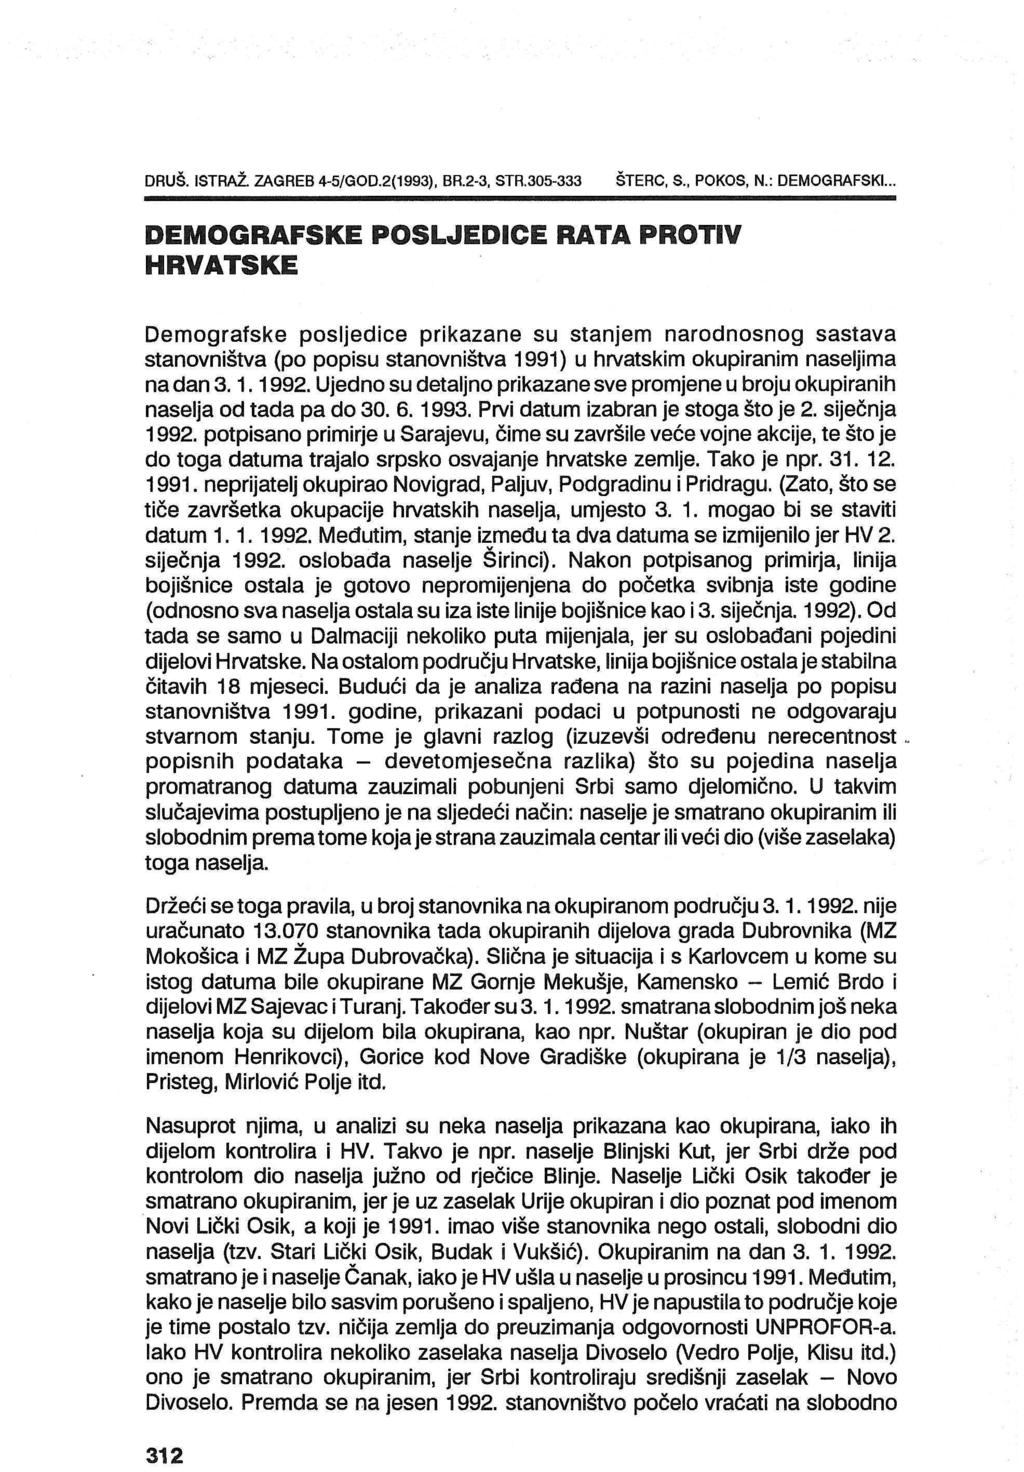 DRUŠ. ISTRAŽ. ZAGREB 4-5/GOD.2(1993), BR.2-3, STR.305-333 ŠTERC, S., POKOS, N.: DEMOGRAFSKI.